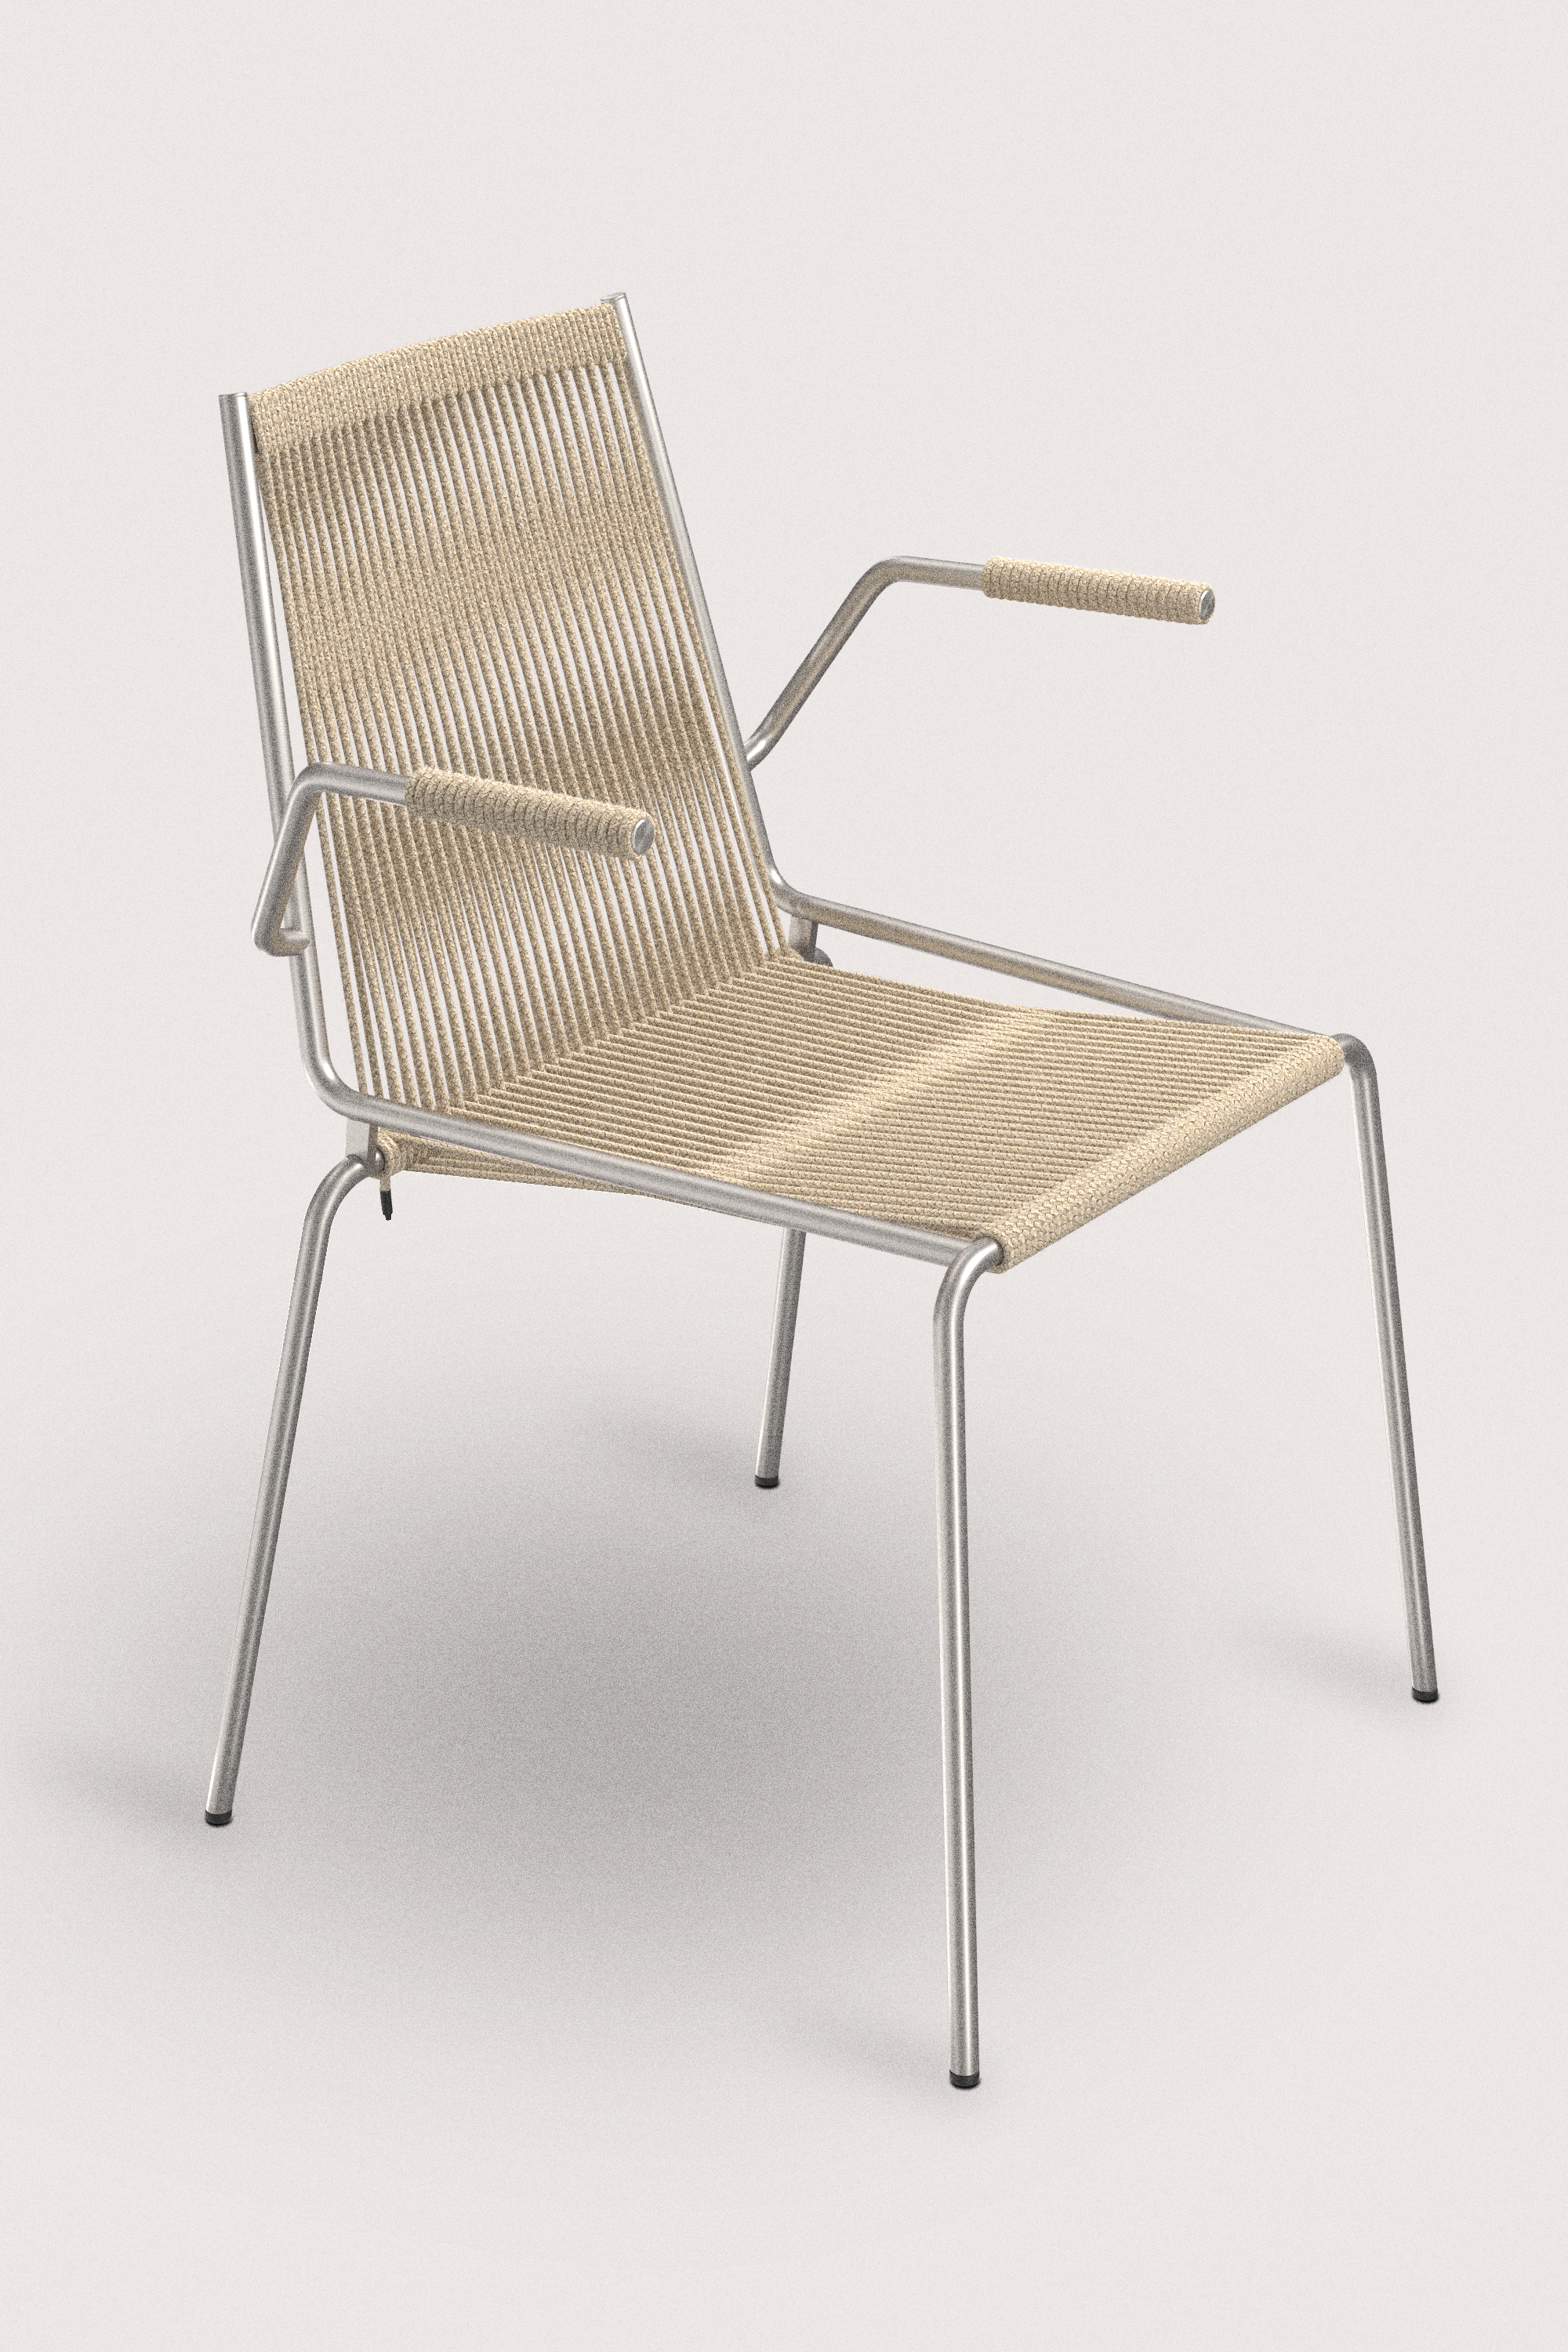 DW202_Noel Chair with Armrest_steel base_nature linen flag halyard_thorup copenhagen.png